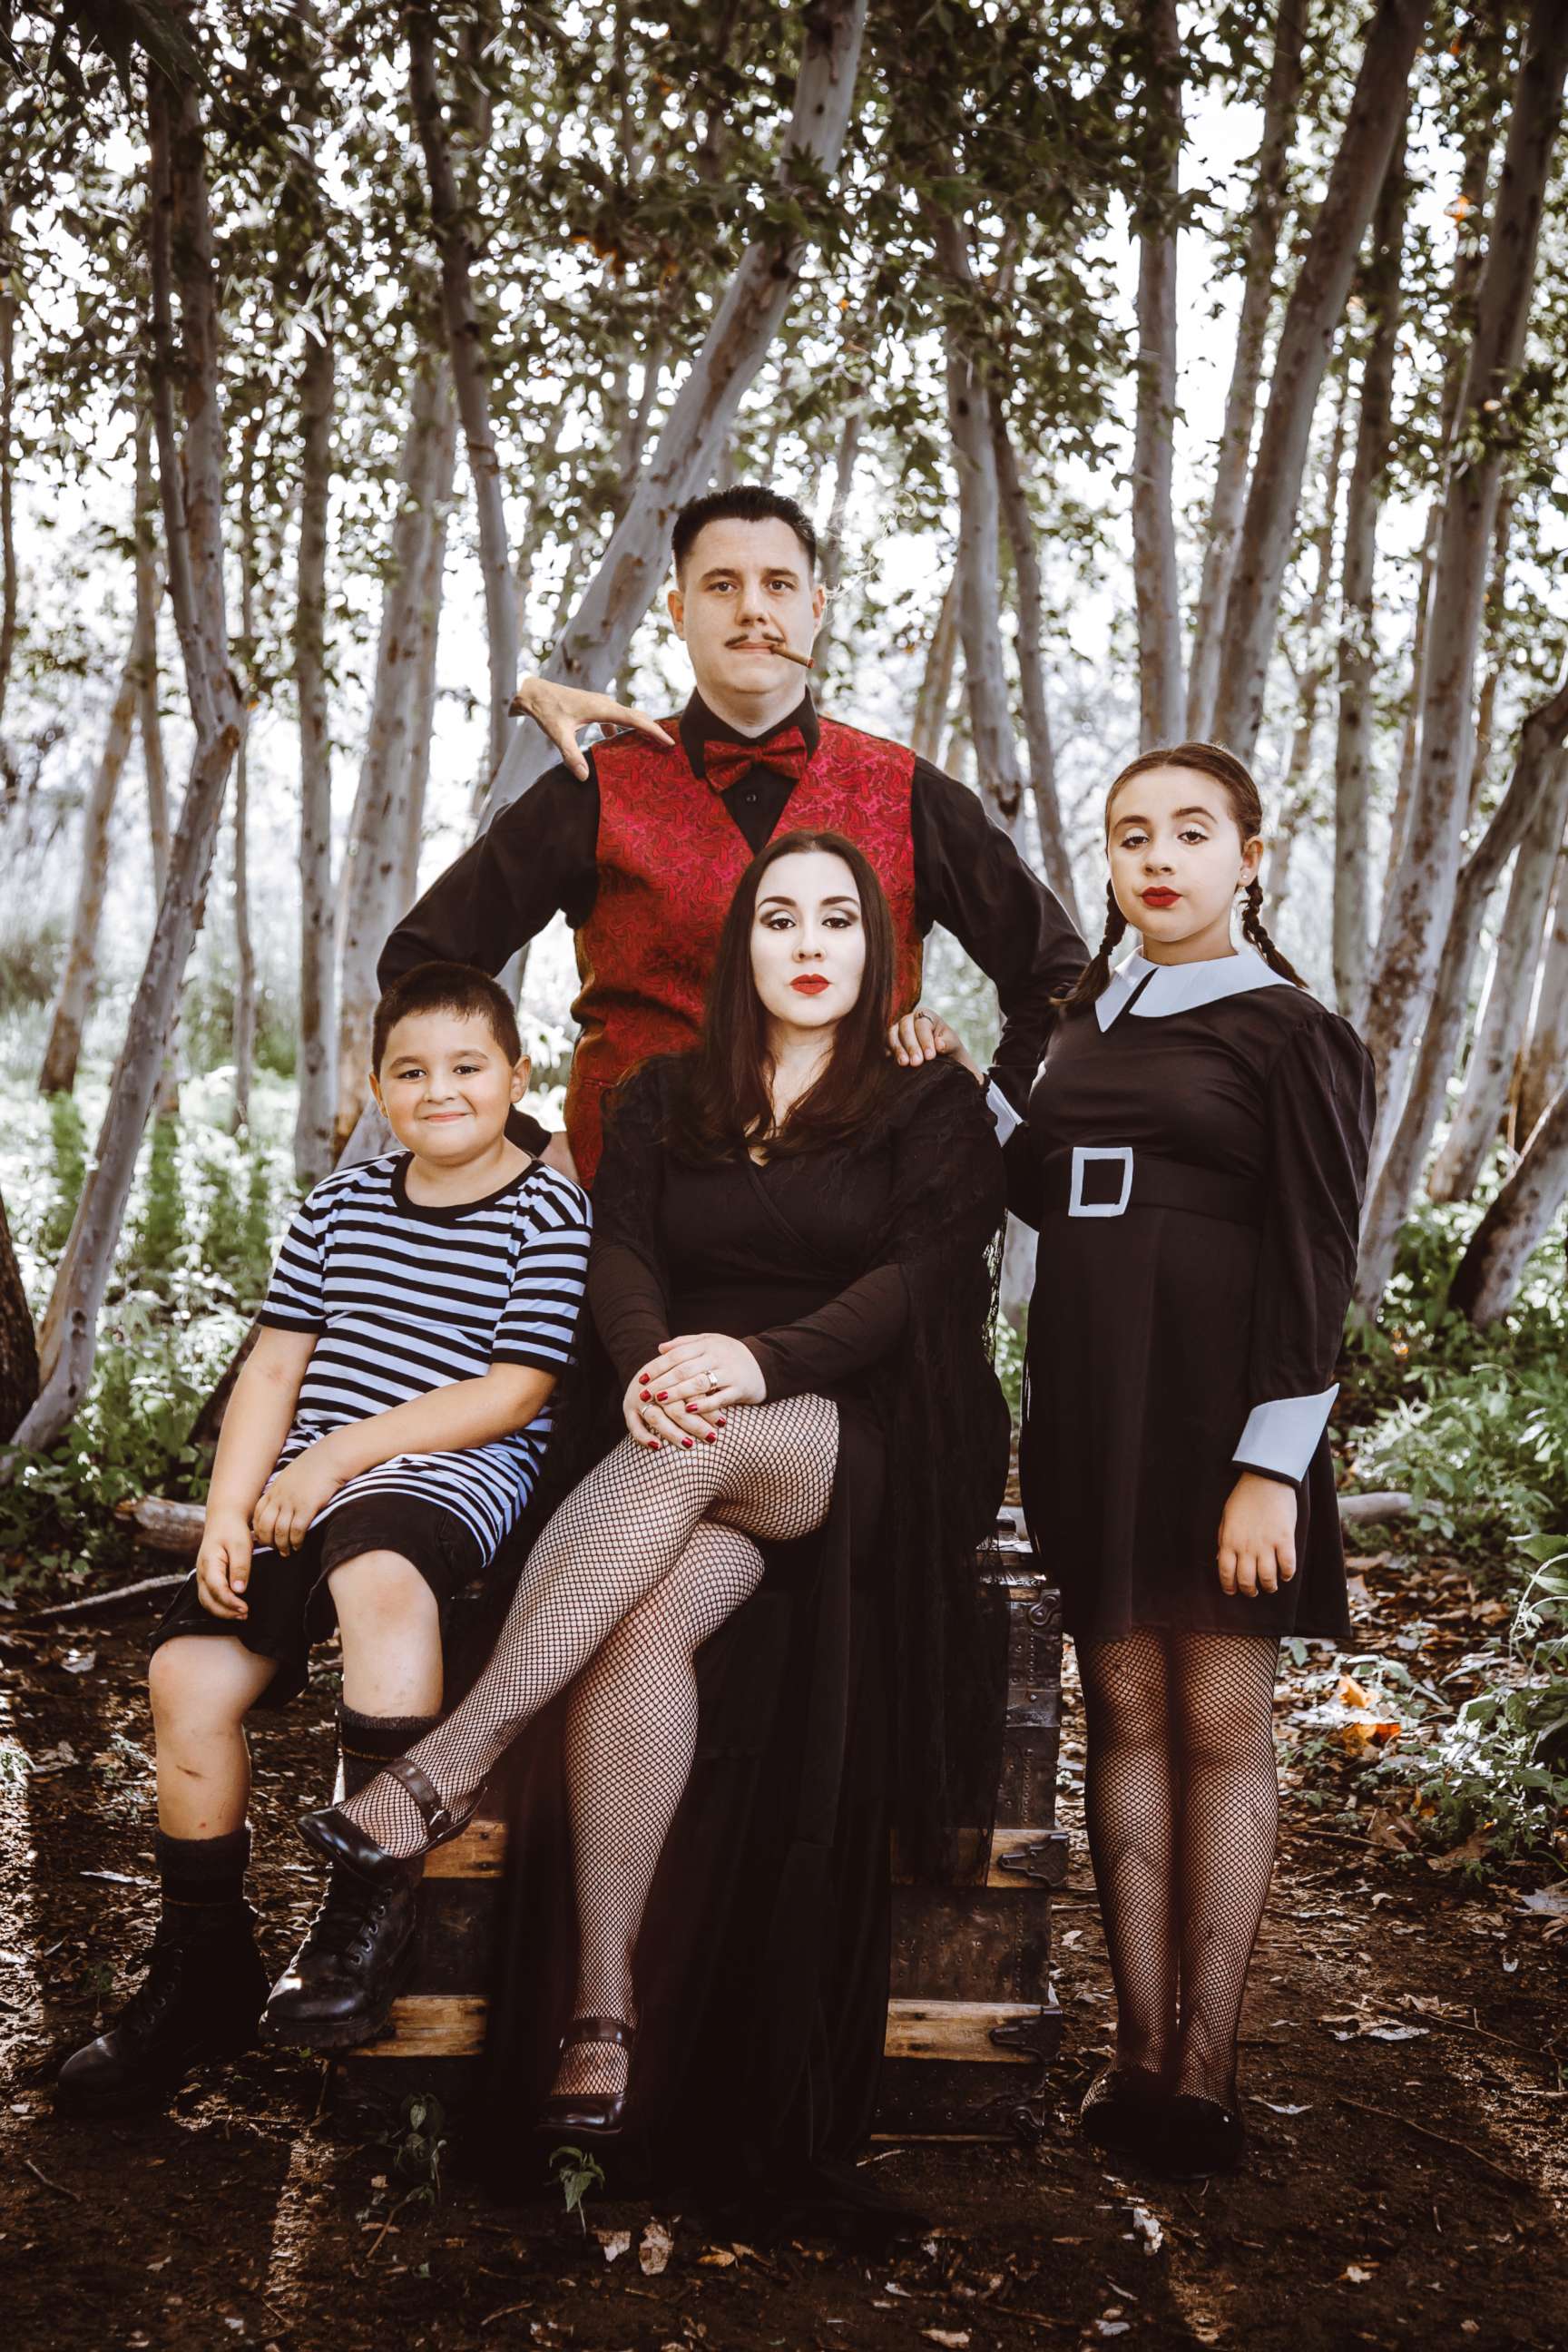 PHOTO: The Basteens of Tucson, Arizona, pose for an epic "Addams Family"-themed Halloween photo.